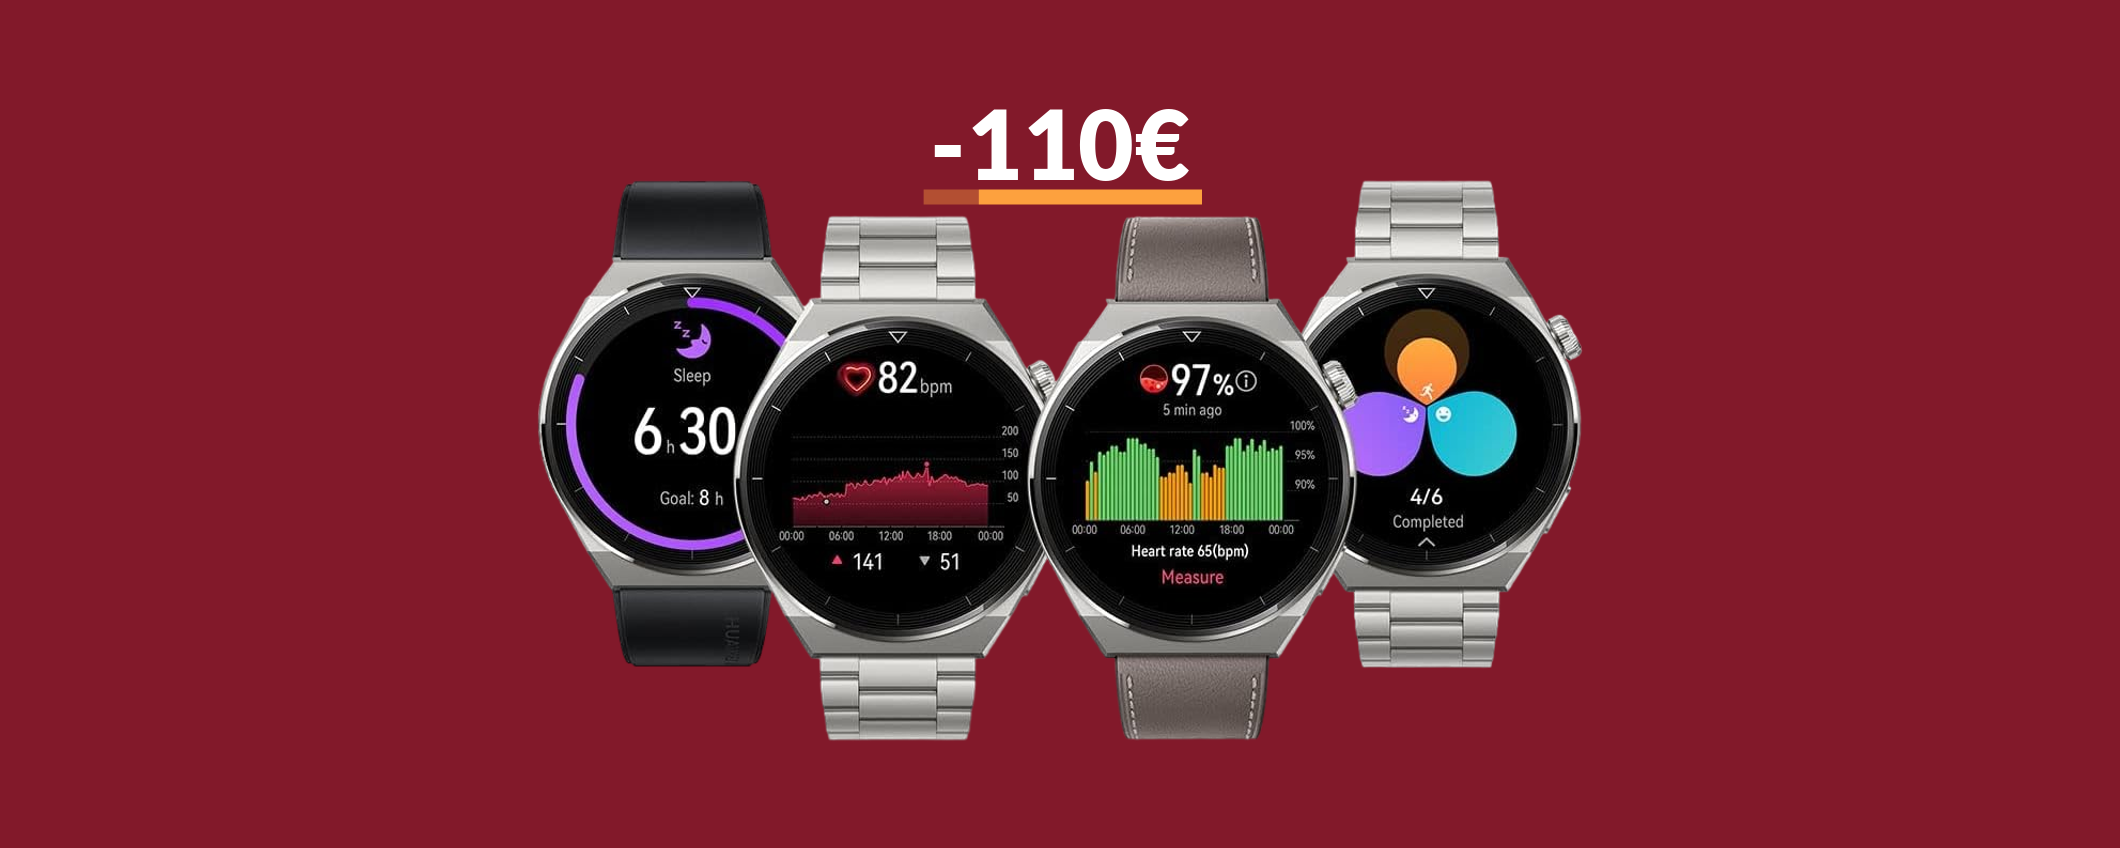 Huawei Watch GT 3 Pro: c'è uno SCONTO mai visto finora (-110€)